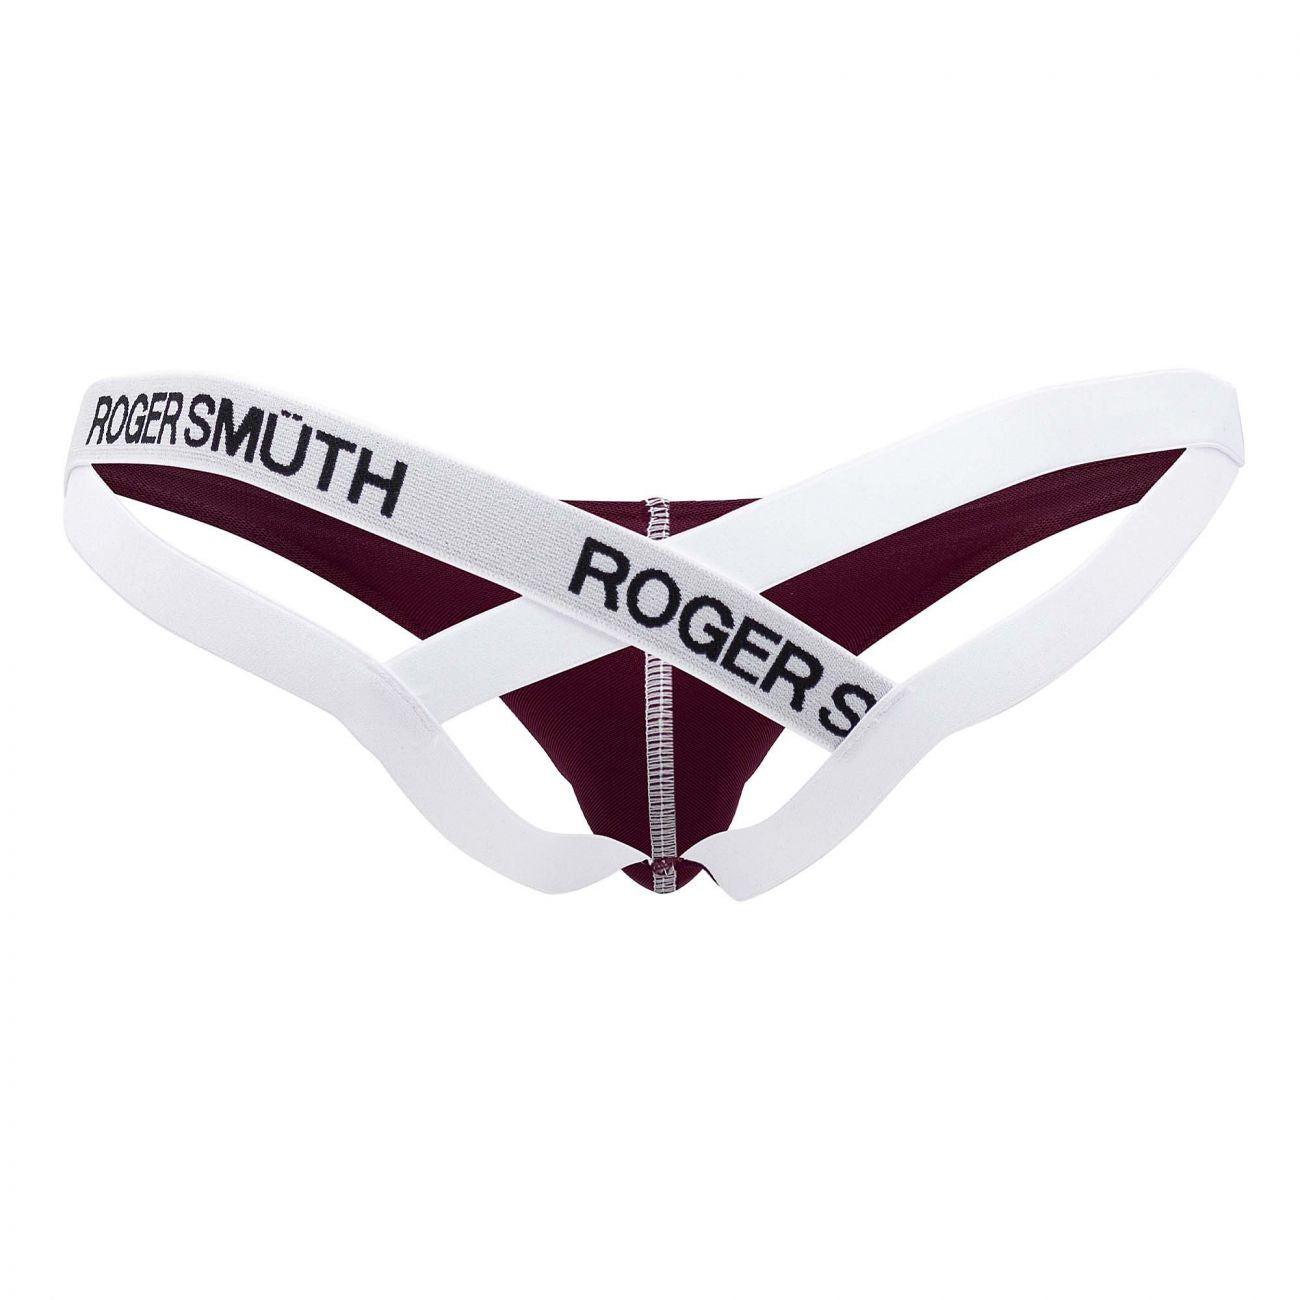 Roger Smuth RS018-1 Jockstrap Burgundy